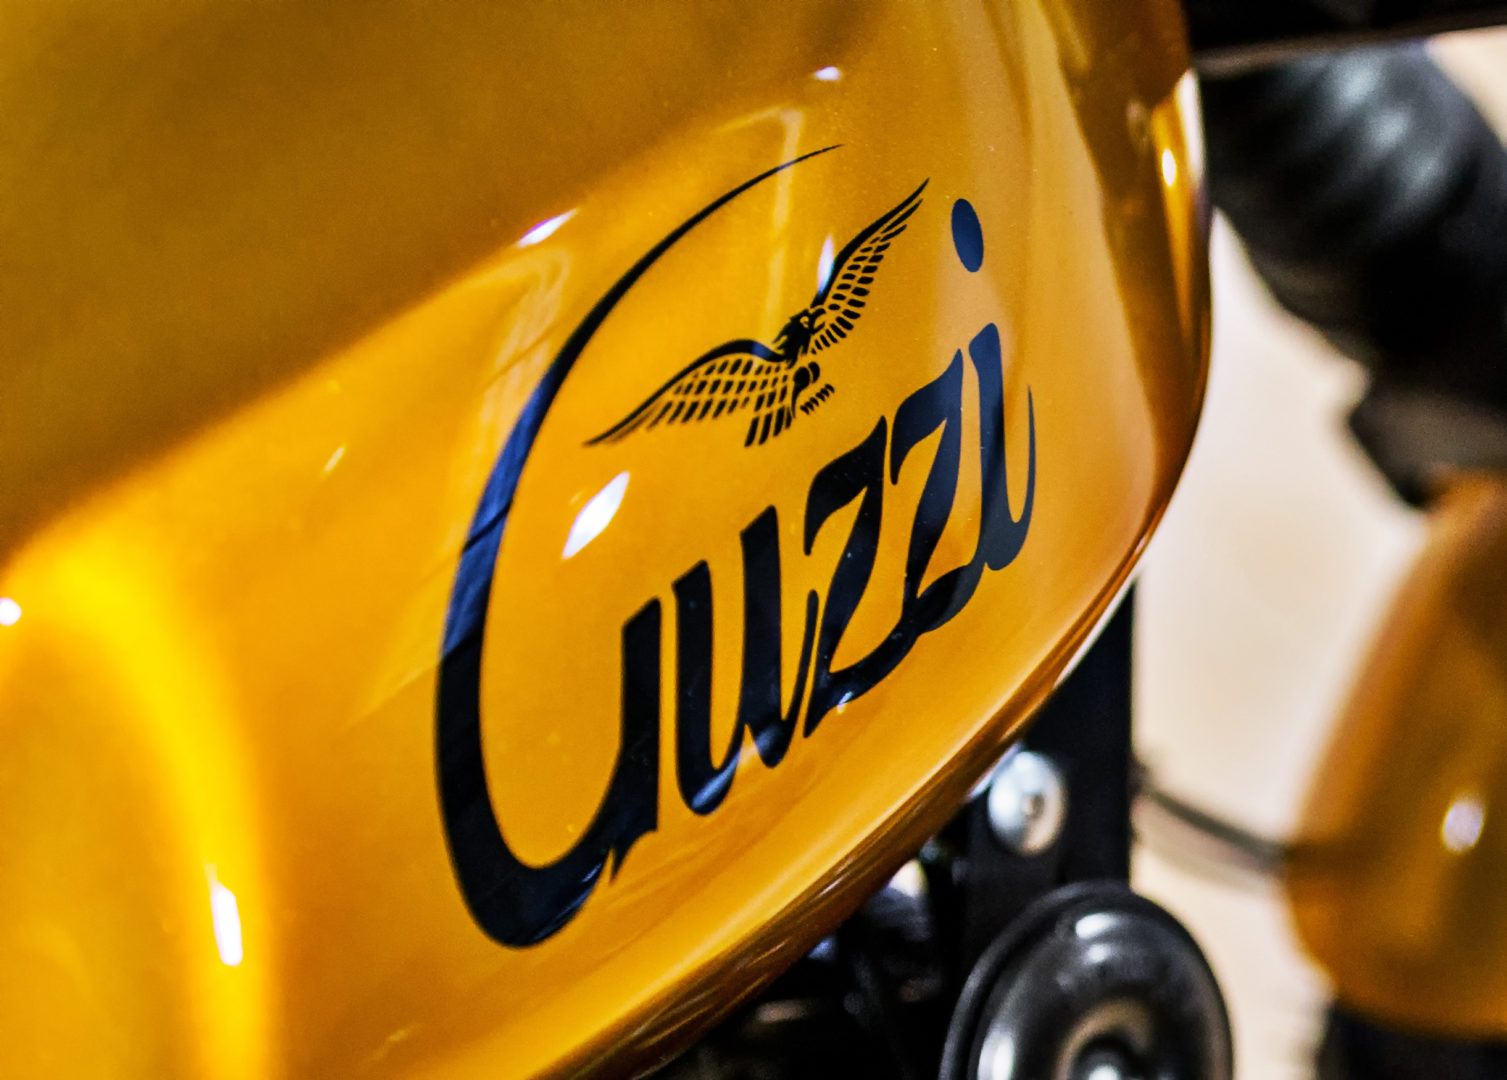 Motorcycle Moto Guzzi logo